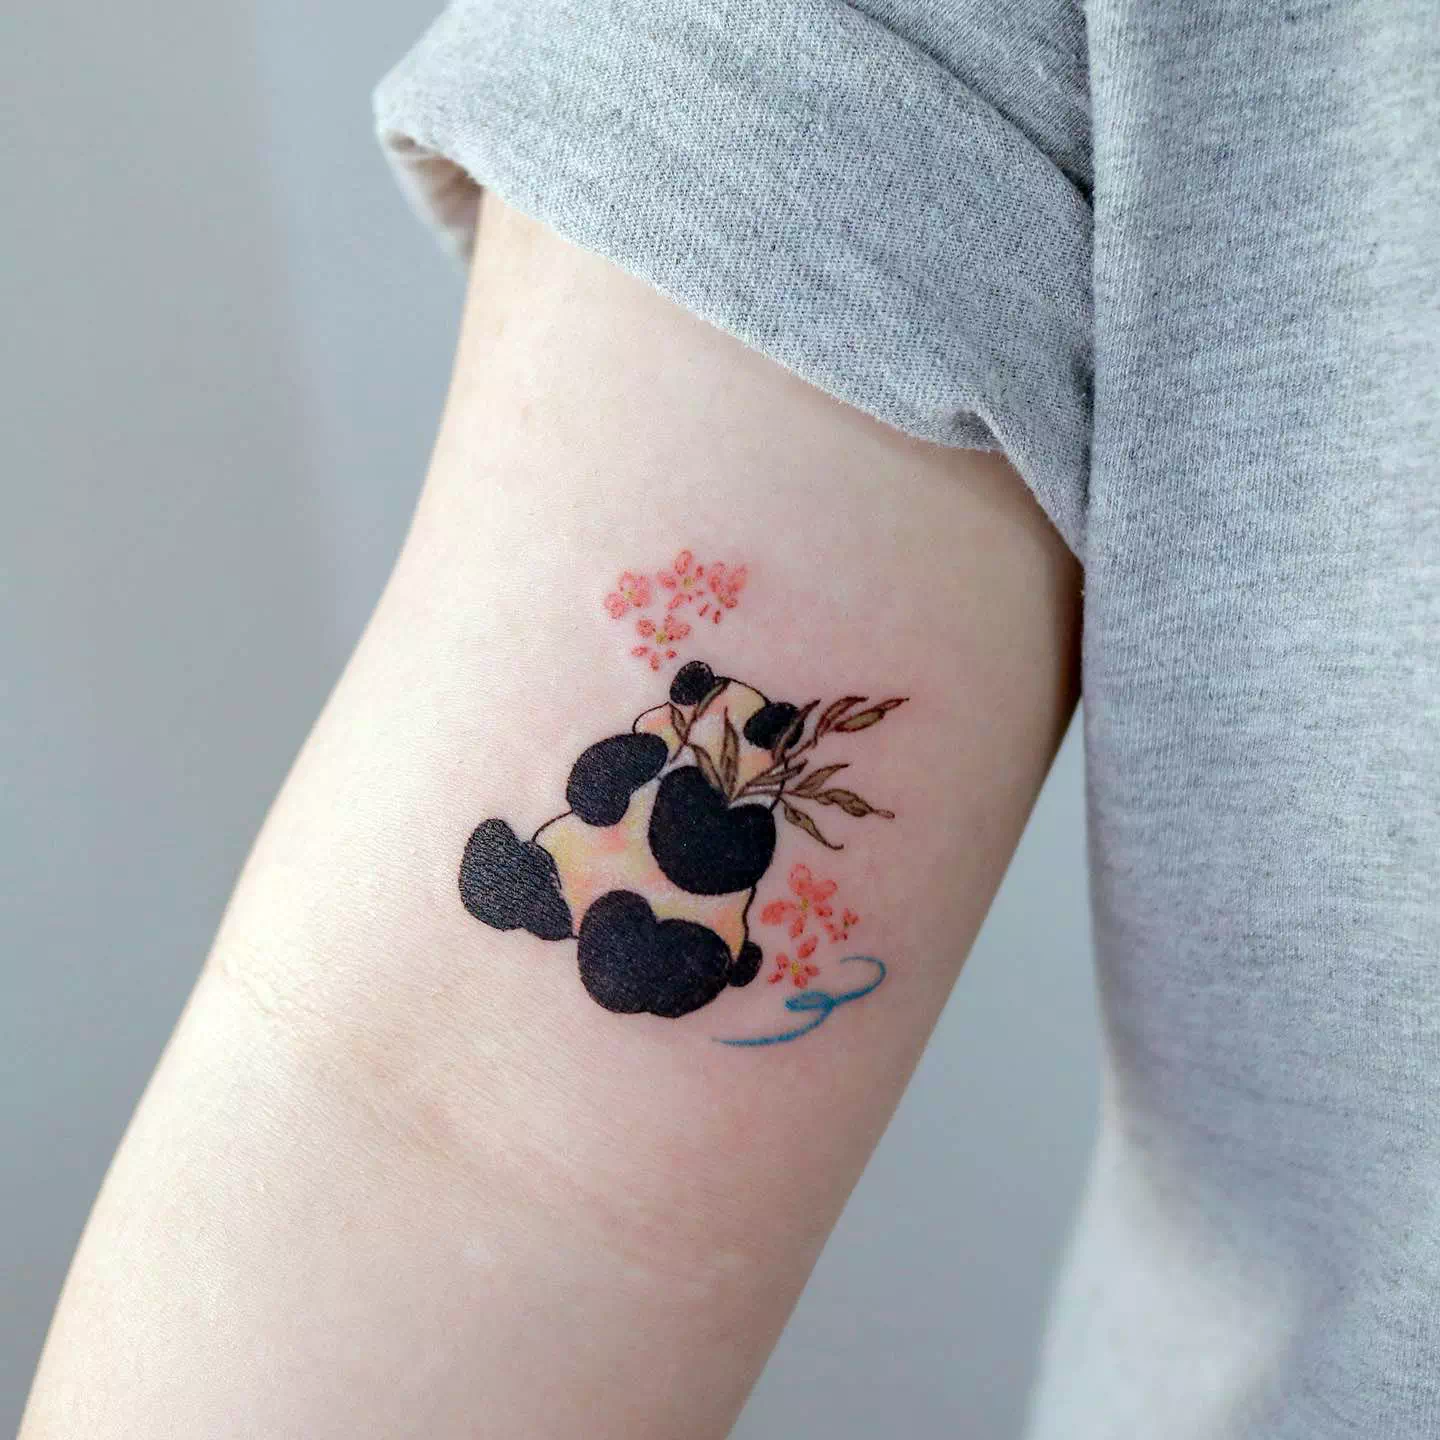 Panda Tattoo Design With Flower